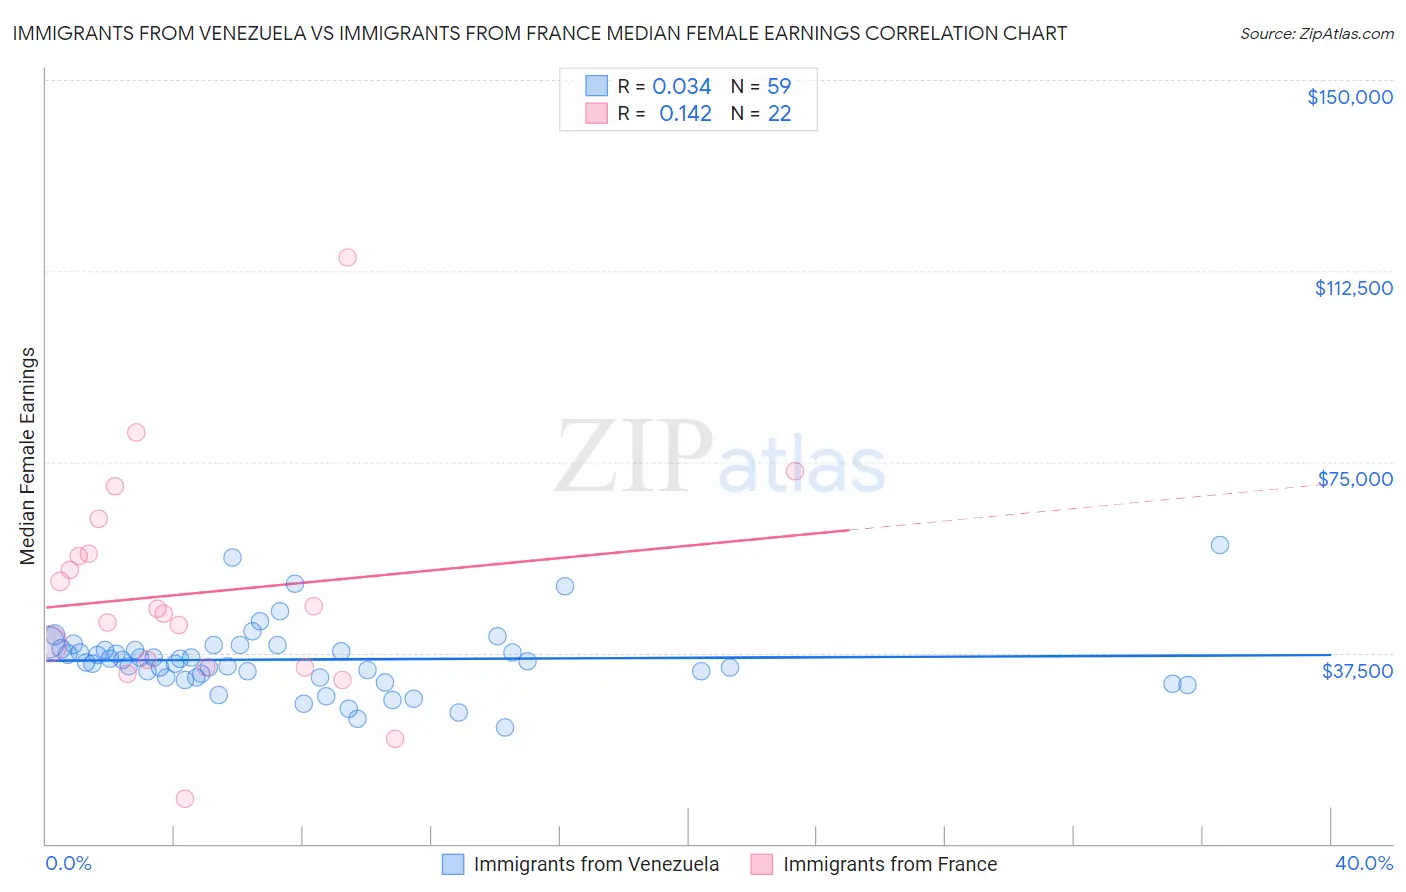 Immigrants from Venezuela vs Immigrants from France Median Female Earnings